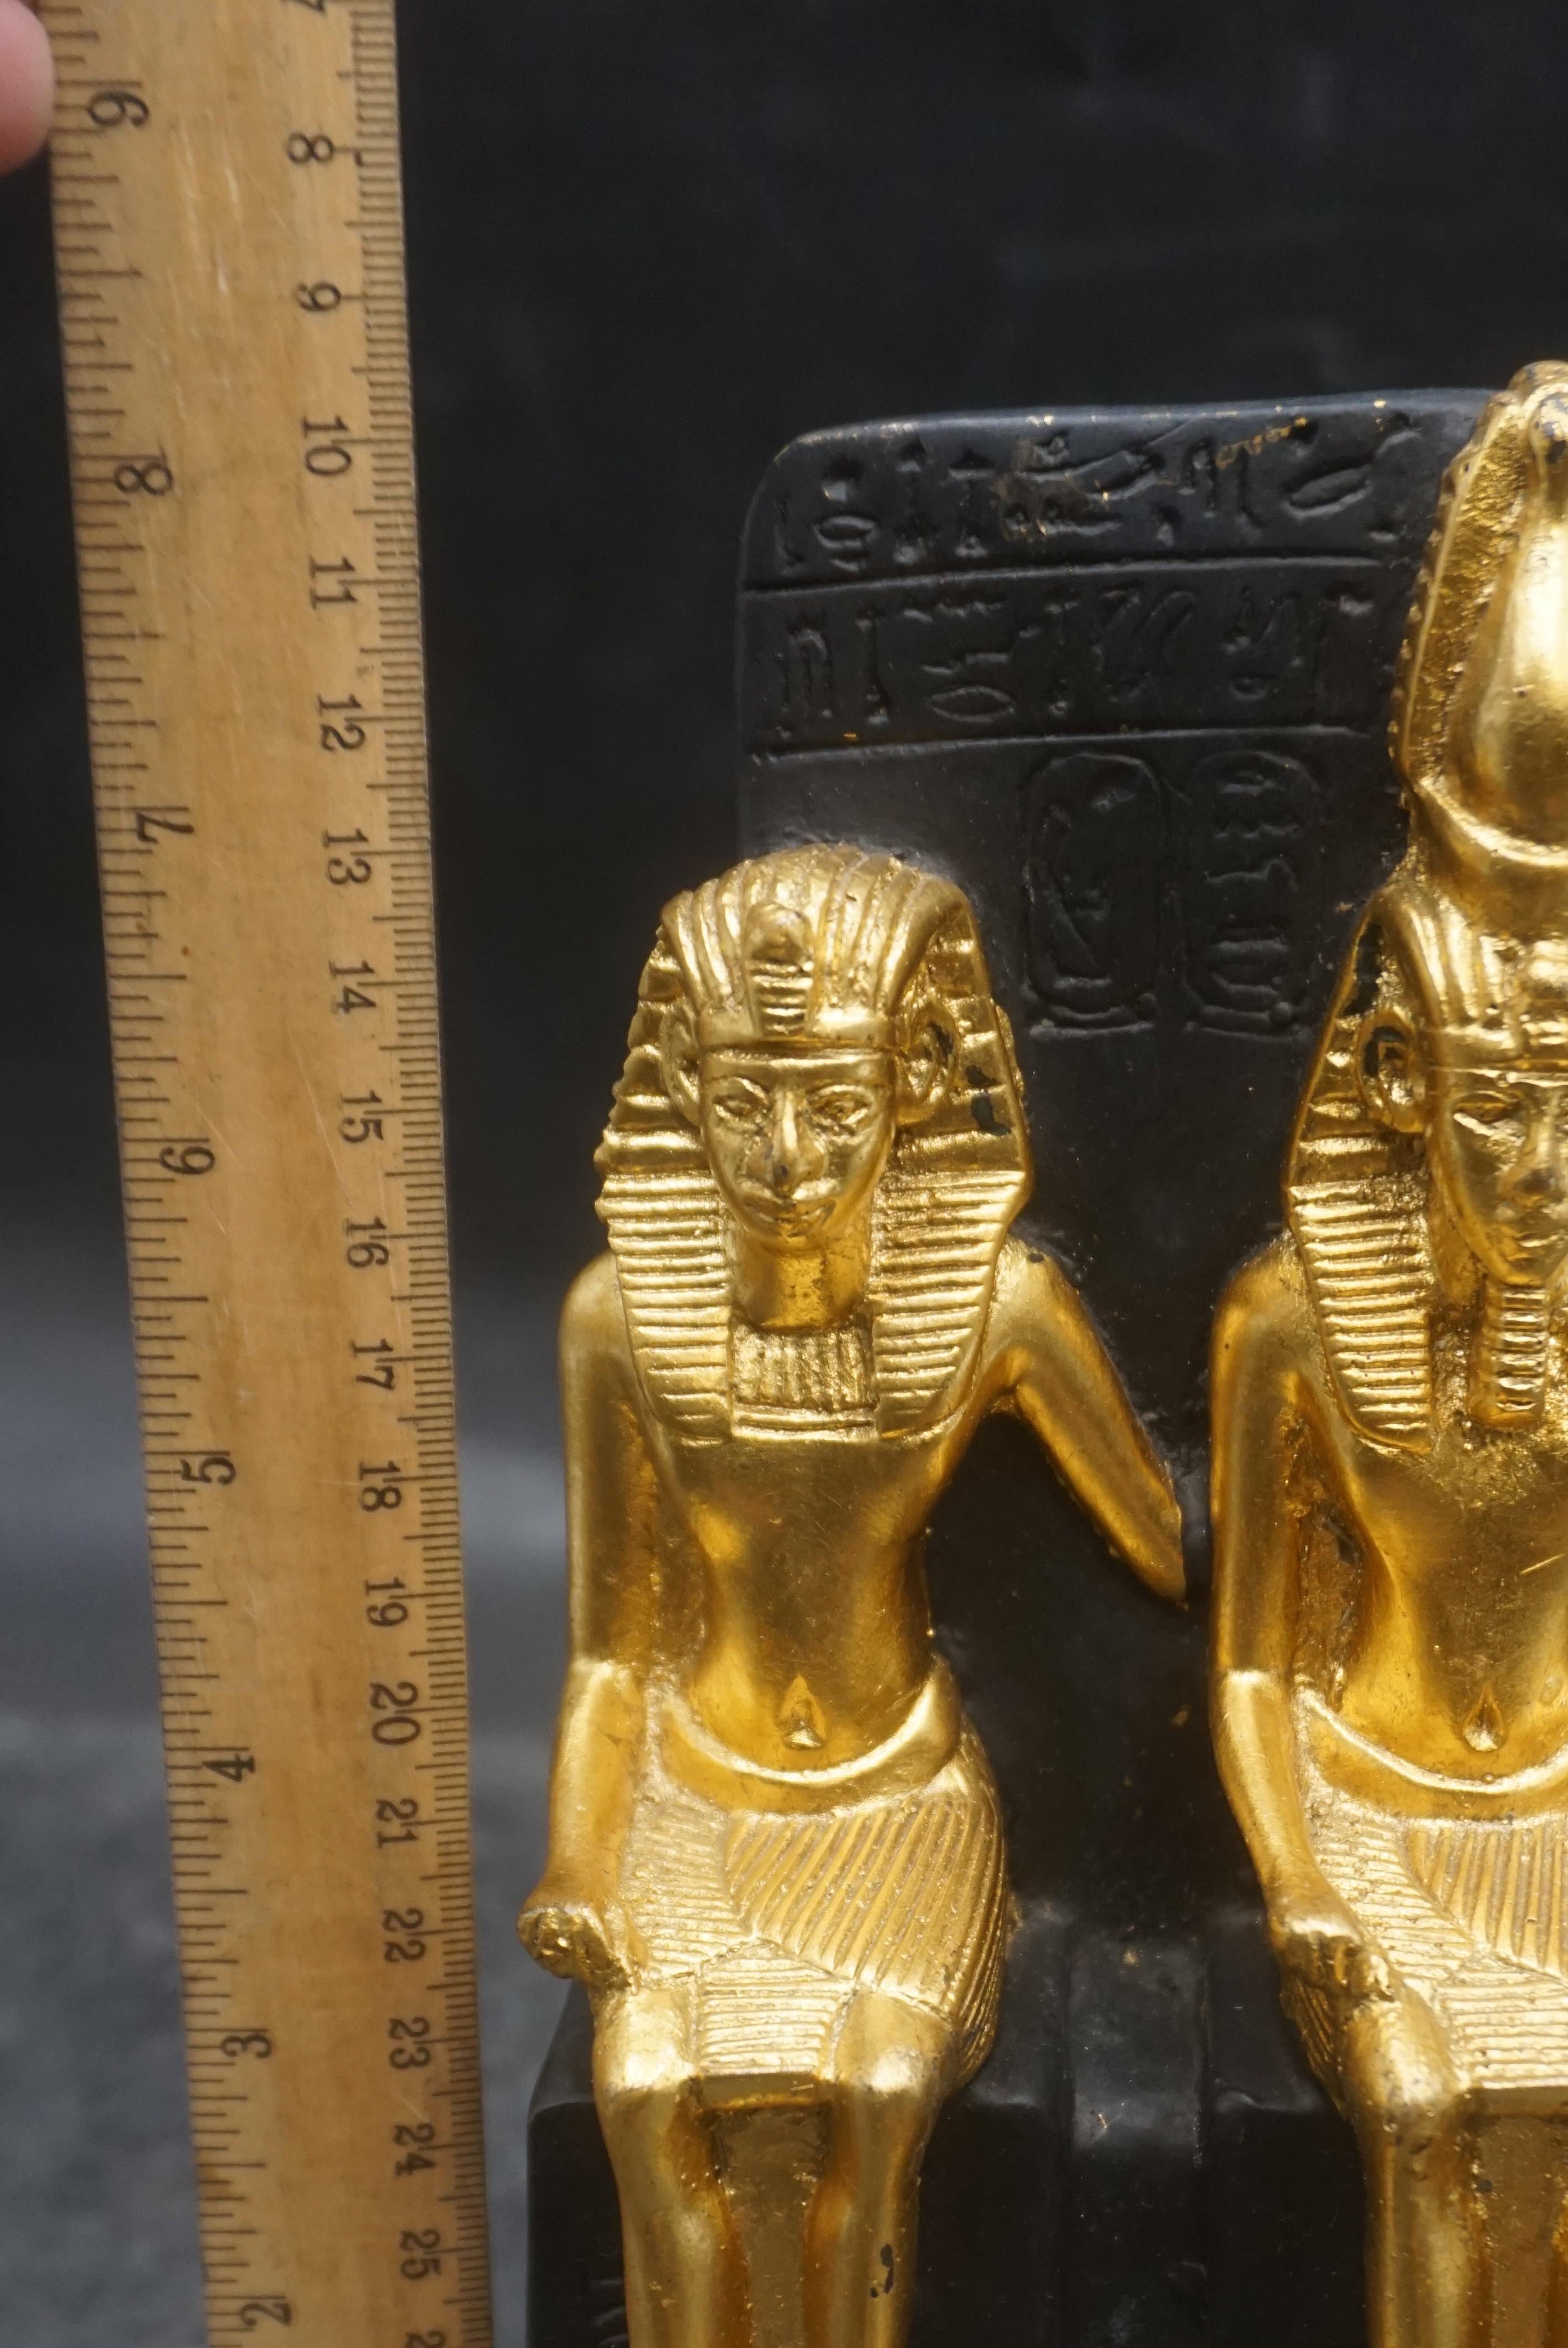 Egyptian Figurine W/ Pharaoh & Wife (Made In Egypt)